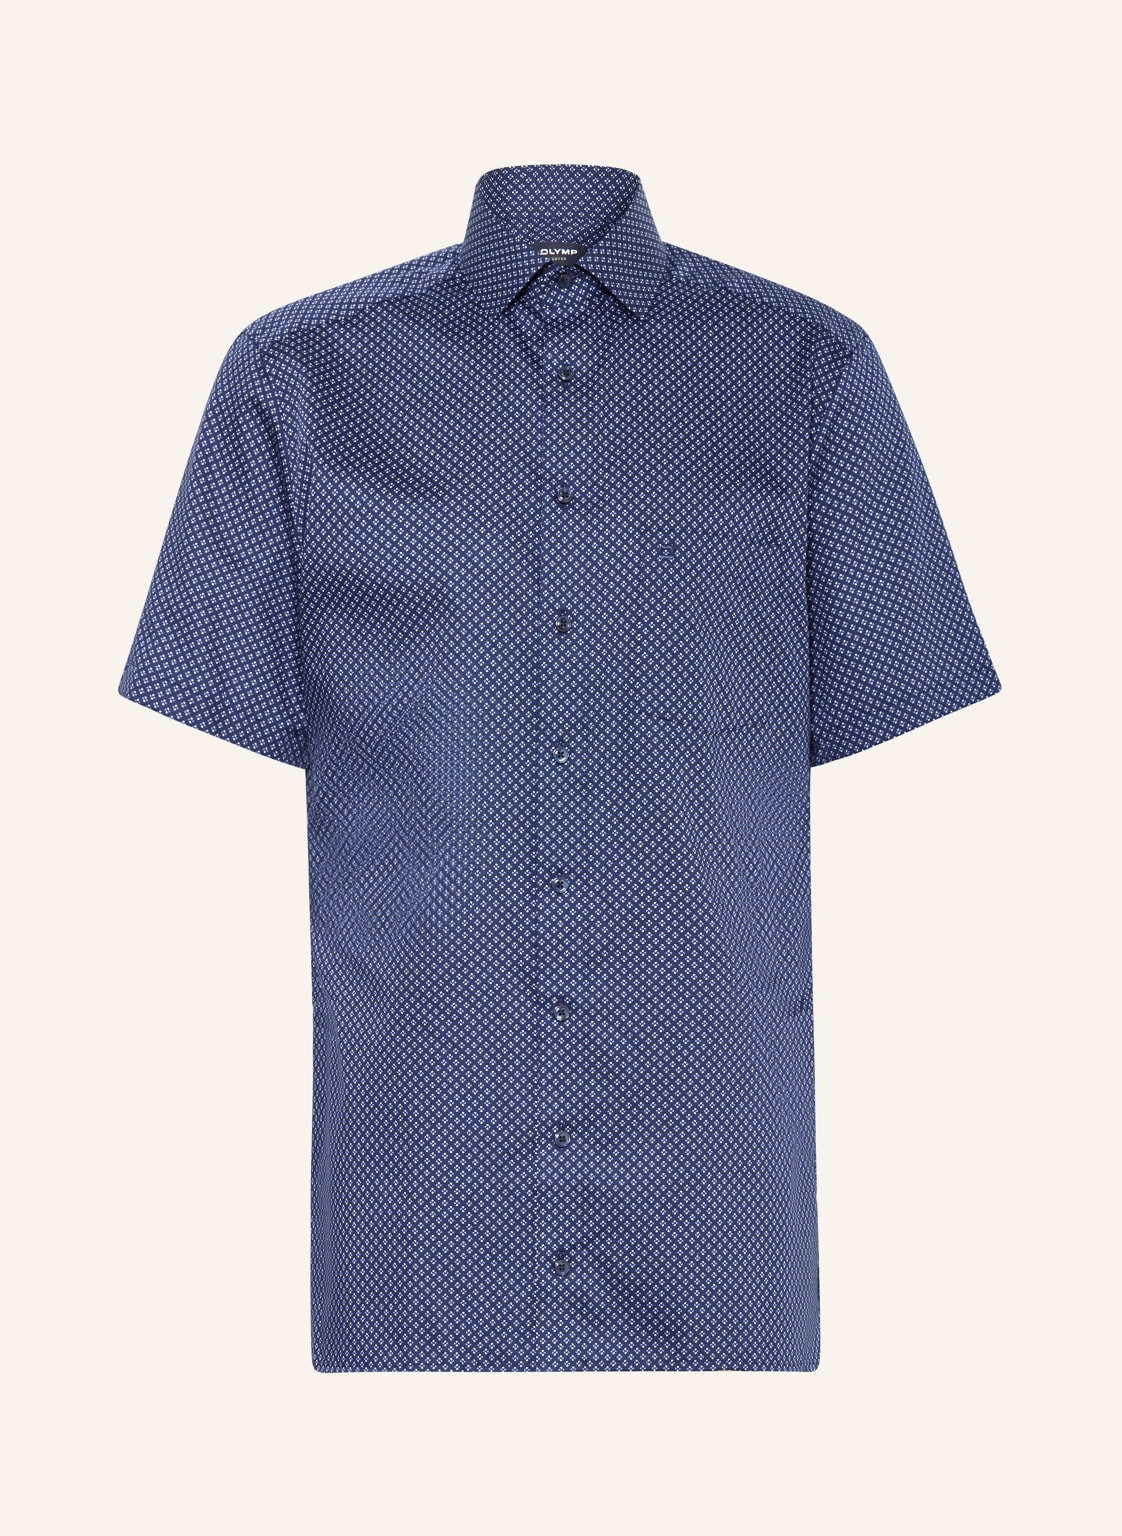 Olymp Kurzarm-Hemd Luxor Modern Fit blau von Olymp